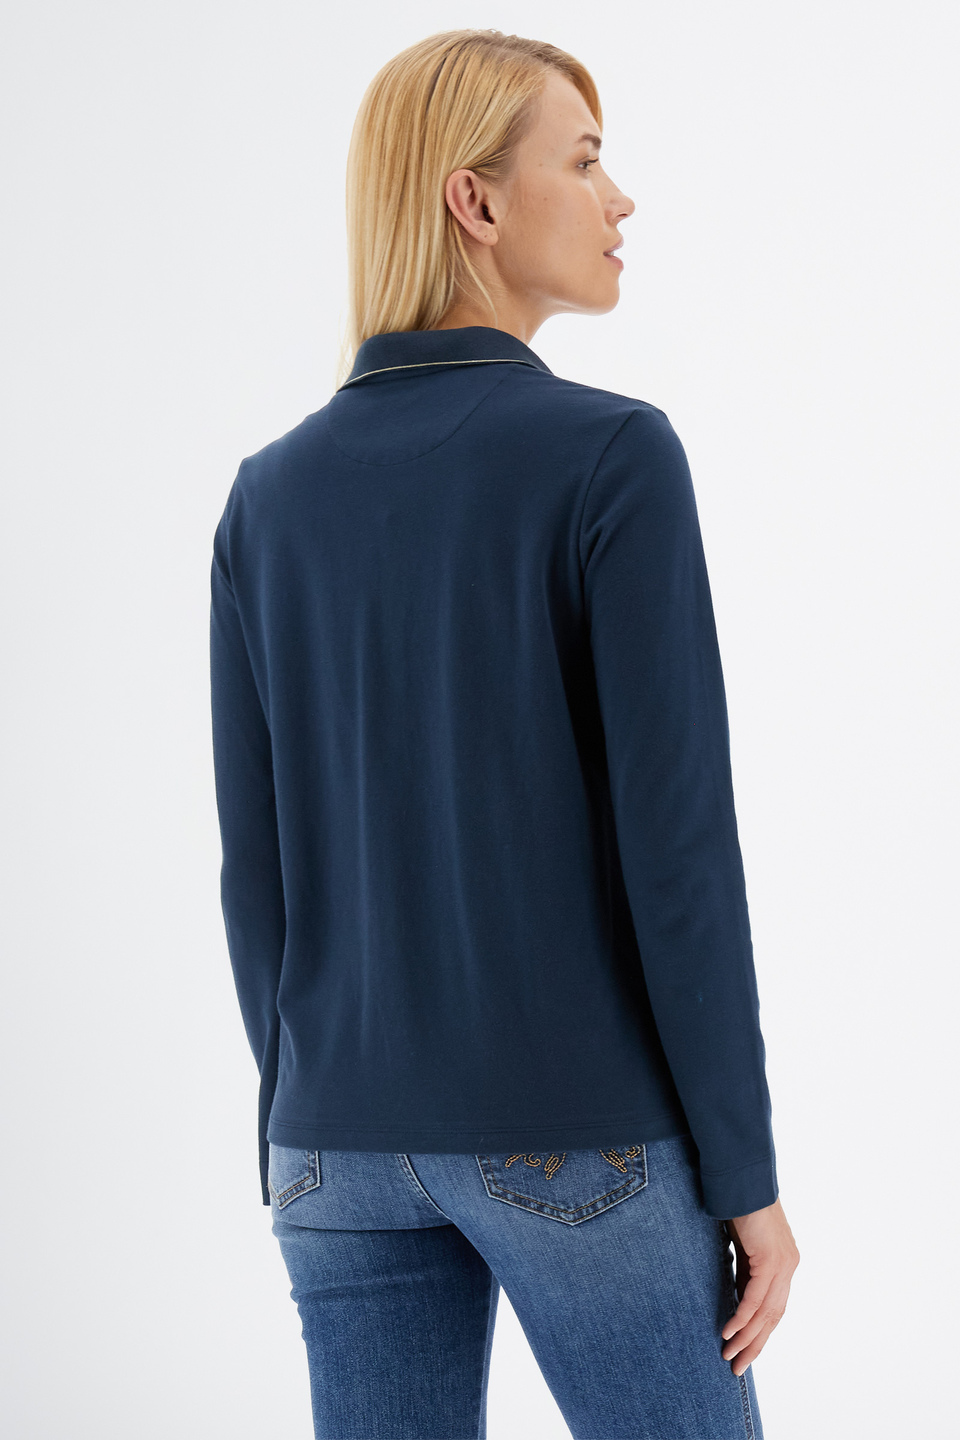 Timeless Damen Poloshirt mit langen Ärmeln aus Baumwollpiquet und regulärer Passform | La Martina - Official Online Shop